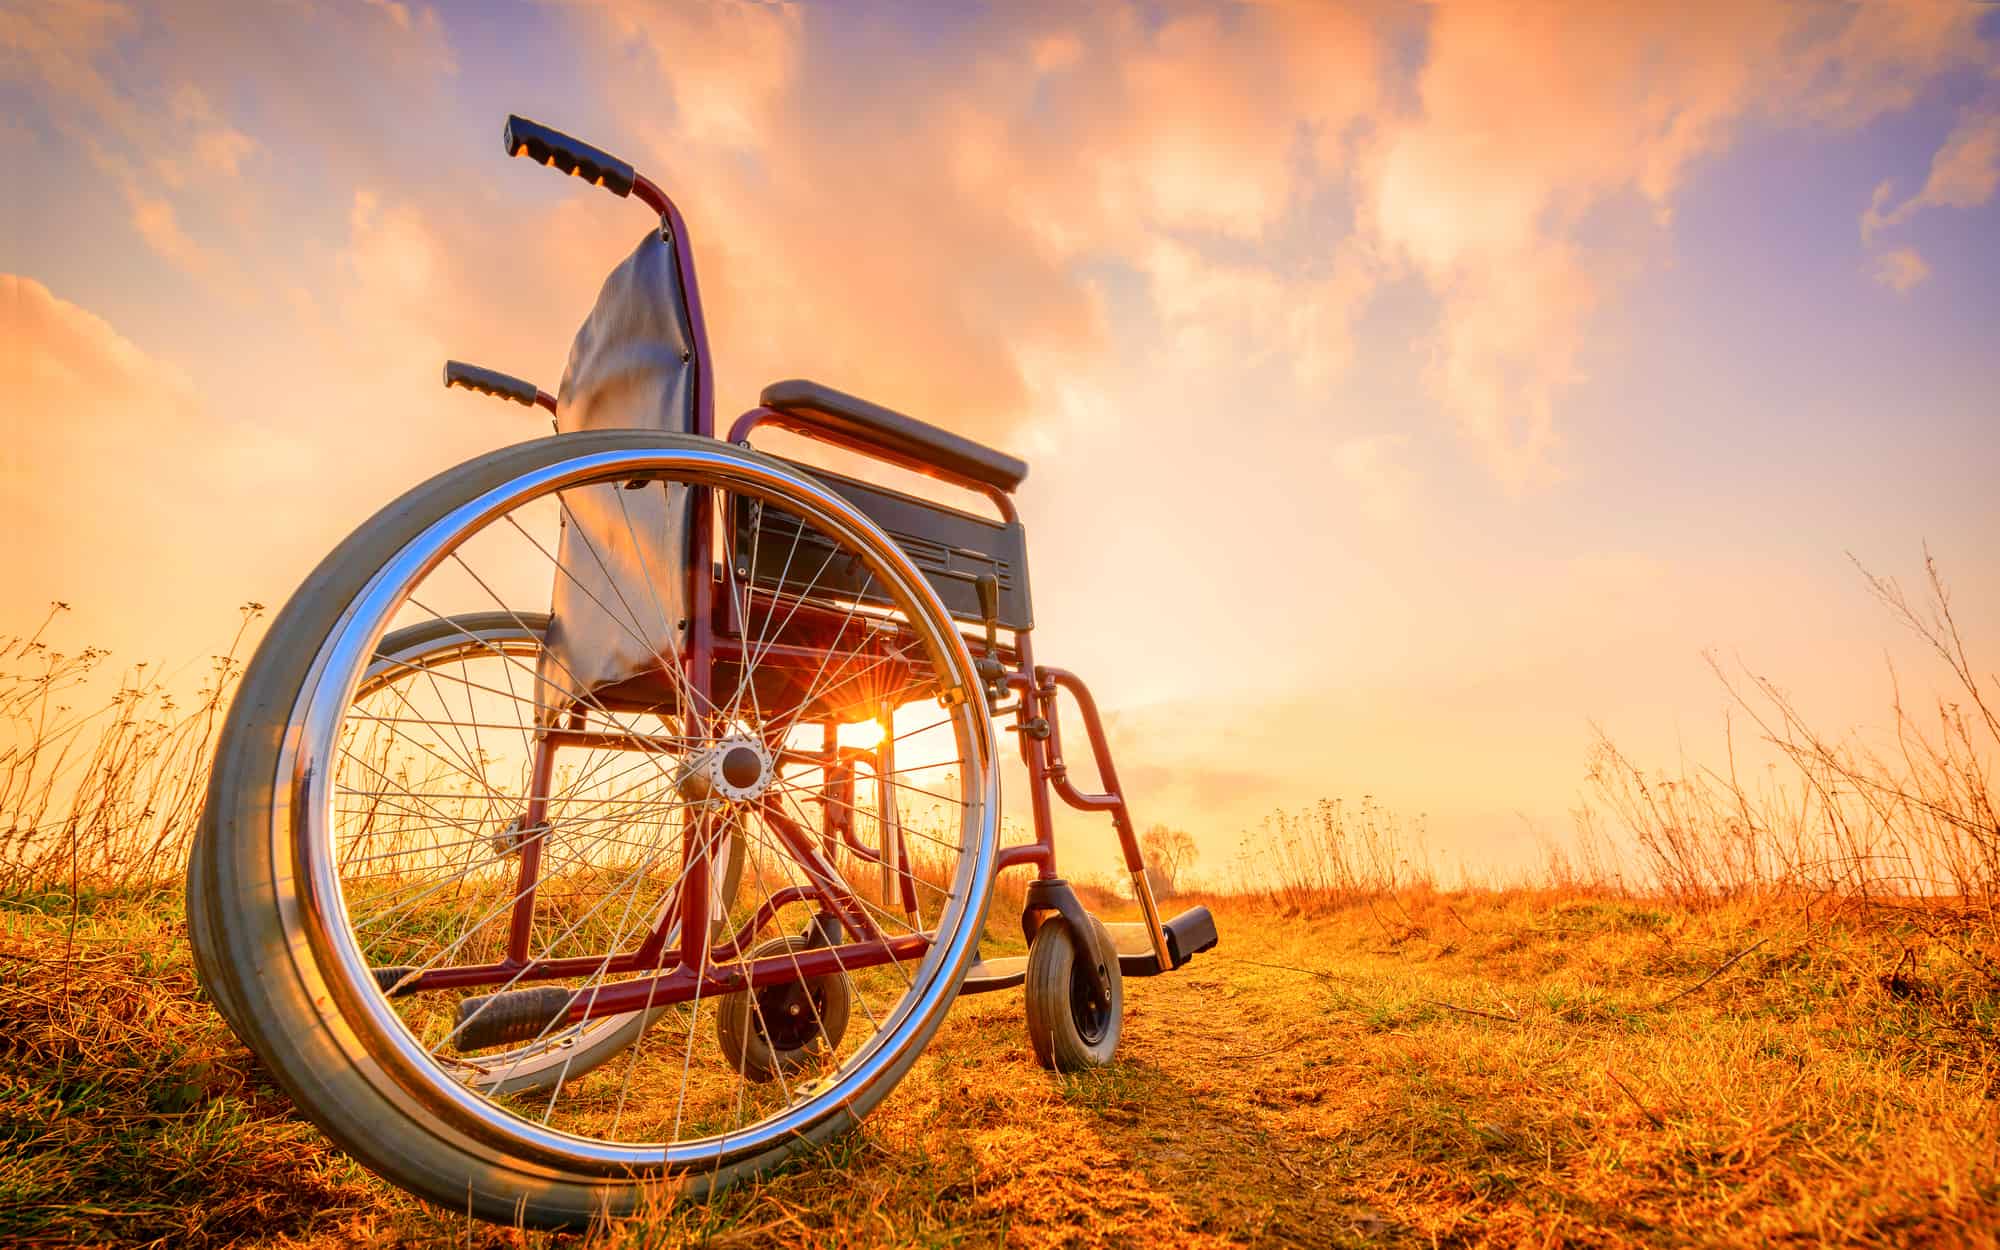 wheellator комбинация ходунков и инвалидного кресла